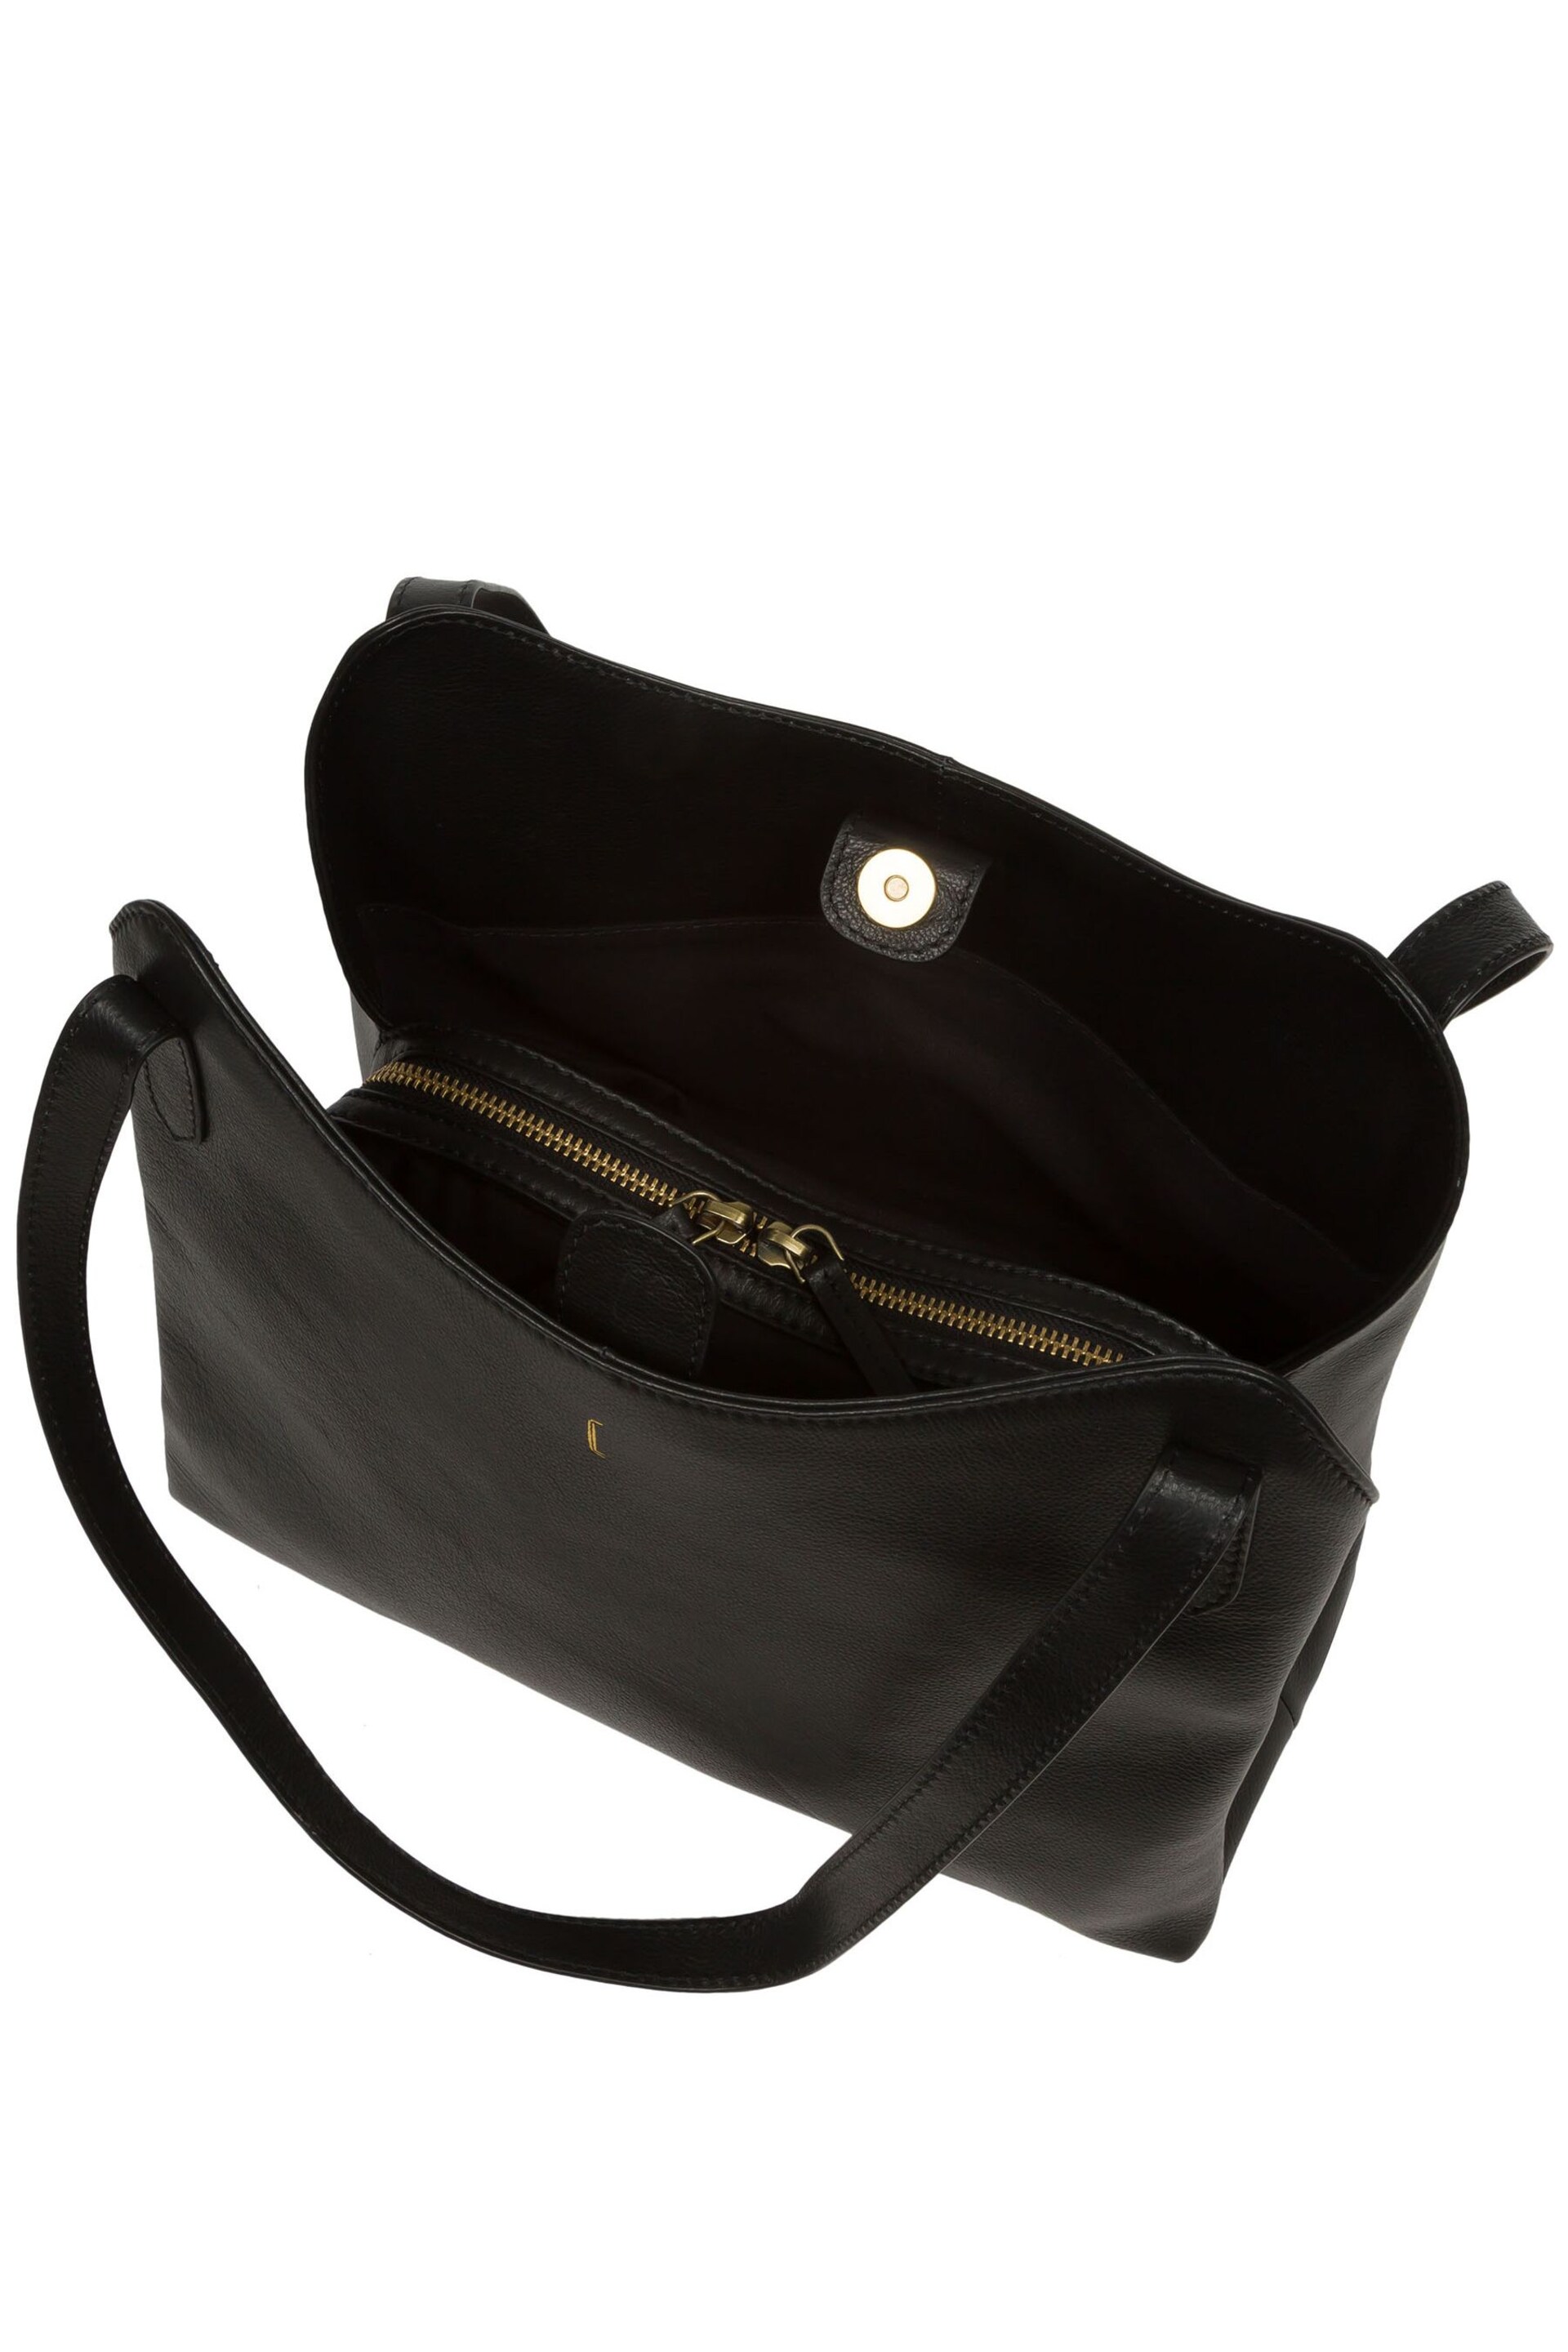 Cultured London Arabella Leather Handbag - Image 5 of 6